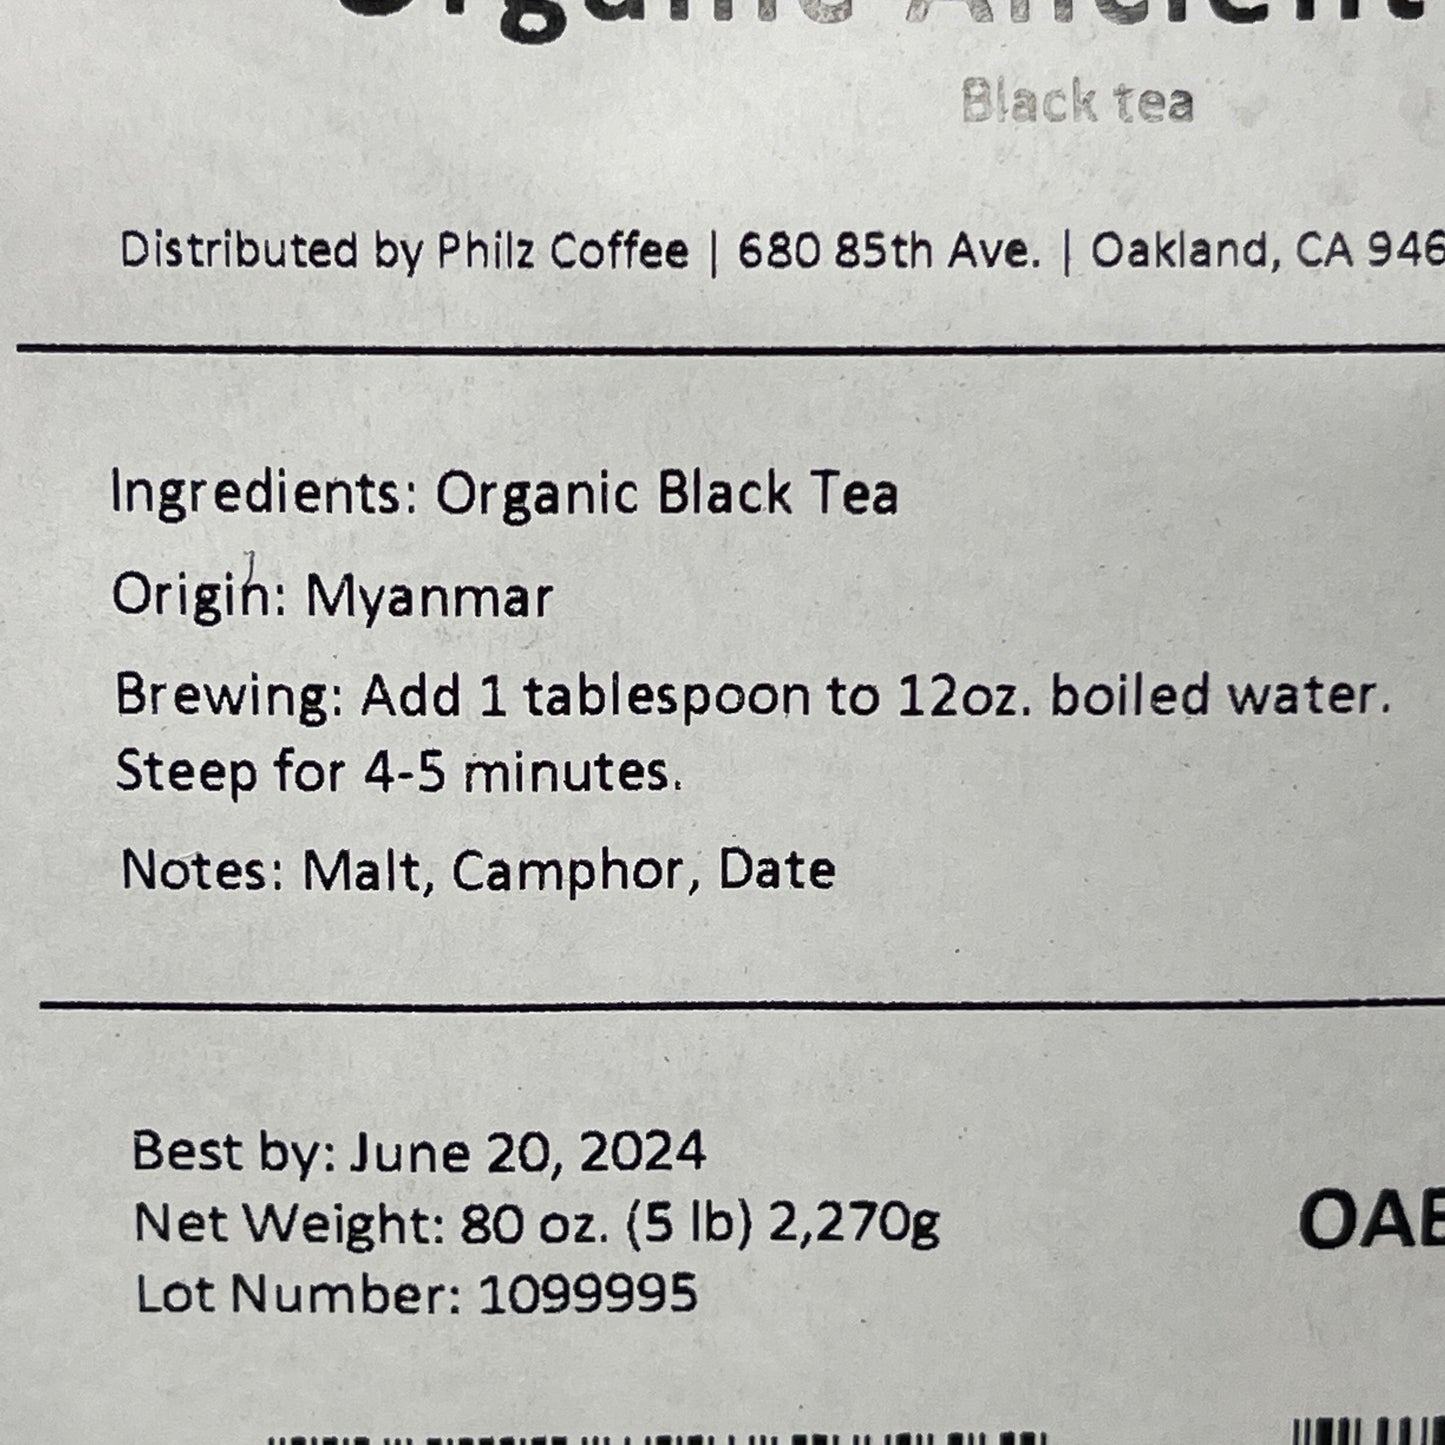 PHILZ COFFEE Organic Ancient Black Tea 80OZ (5 Lb) 6/24 OABPHLZ-5P